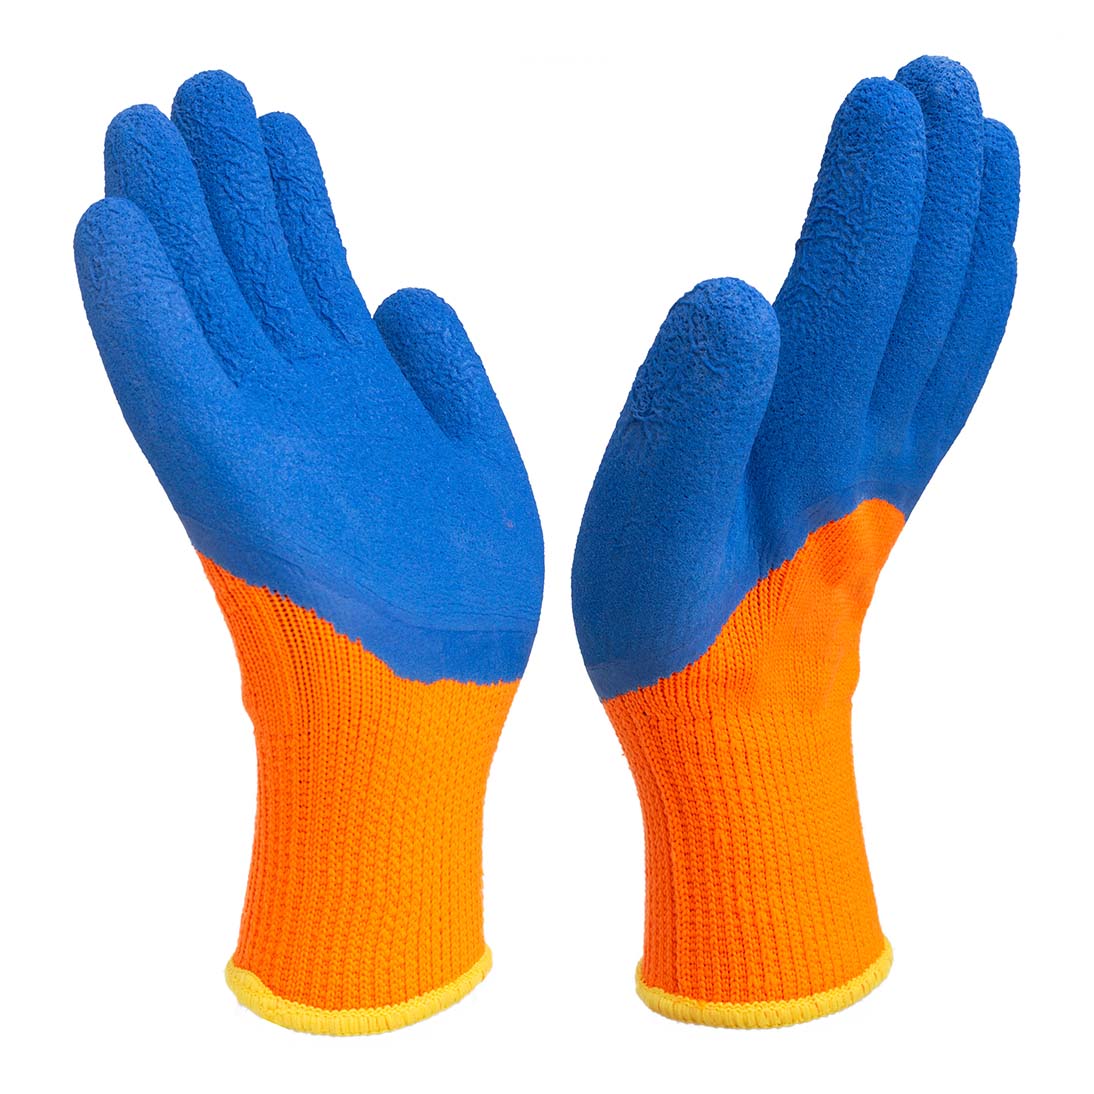 7G latex foam gloves | Half coated gloves | Latex foam gloves